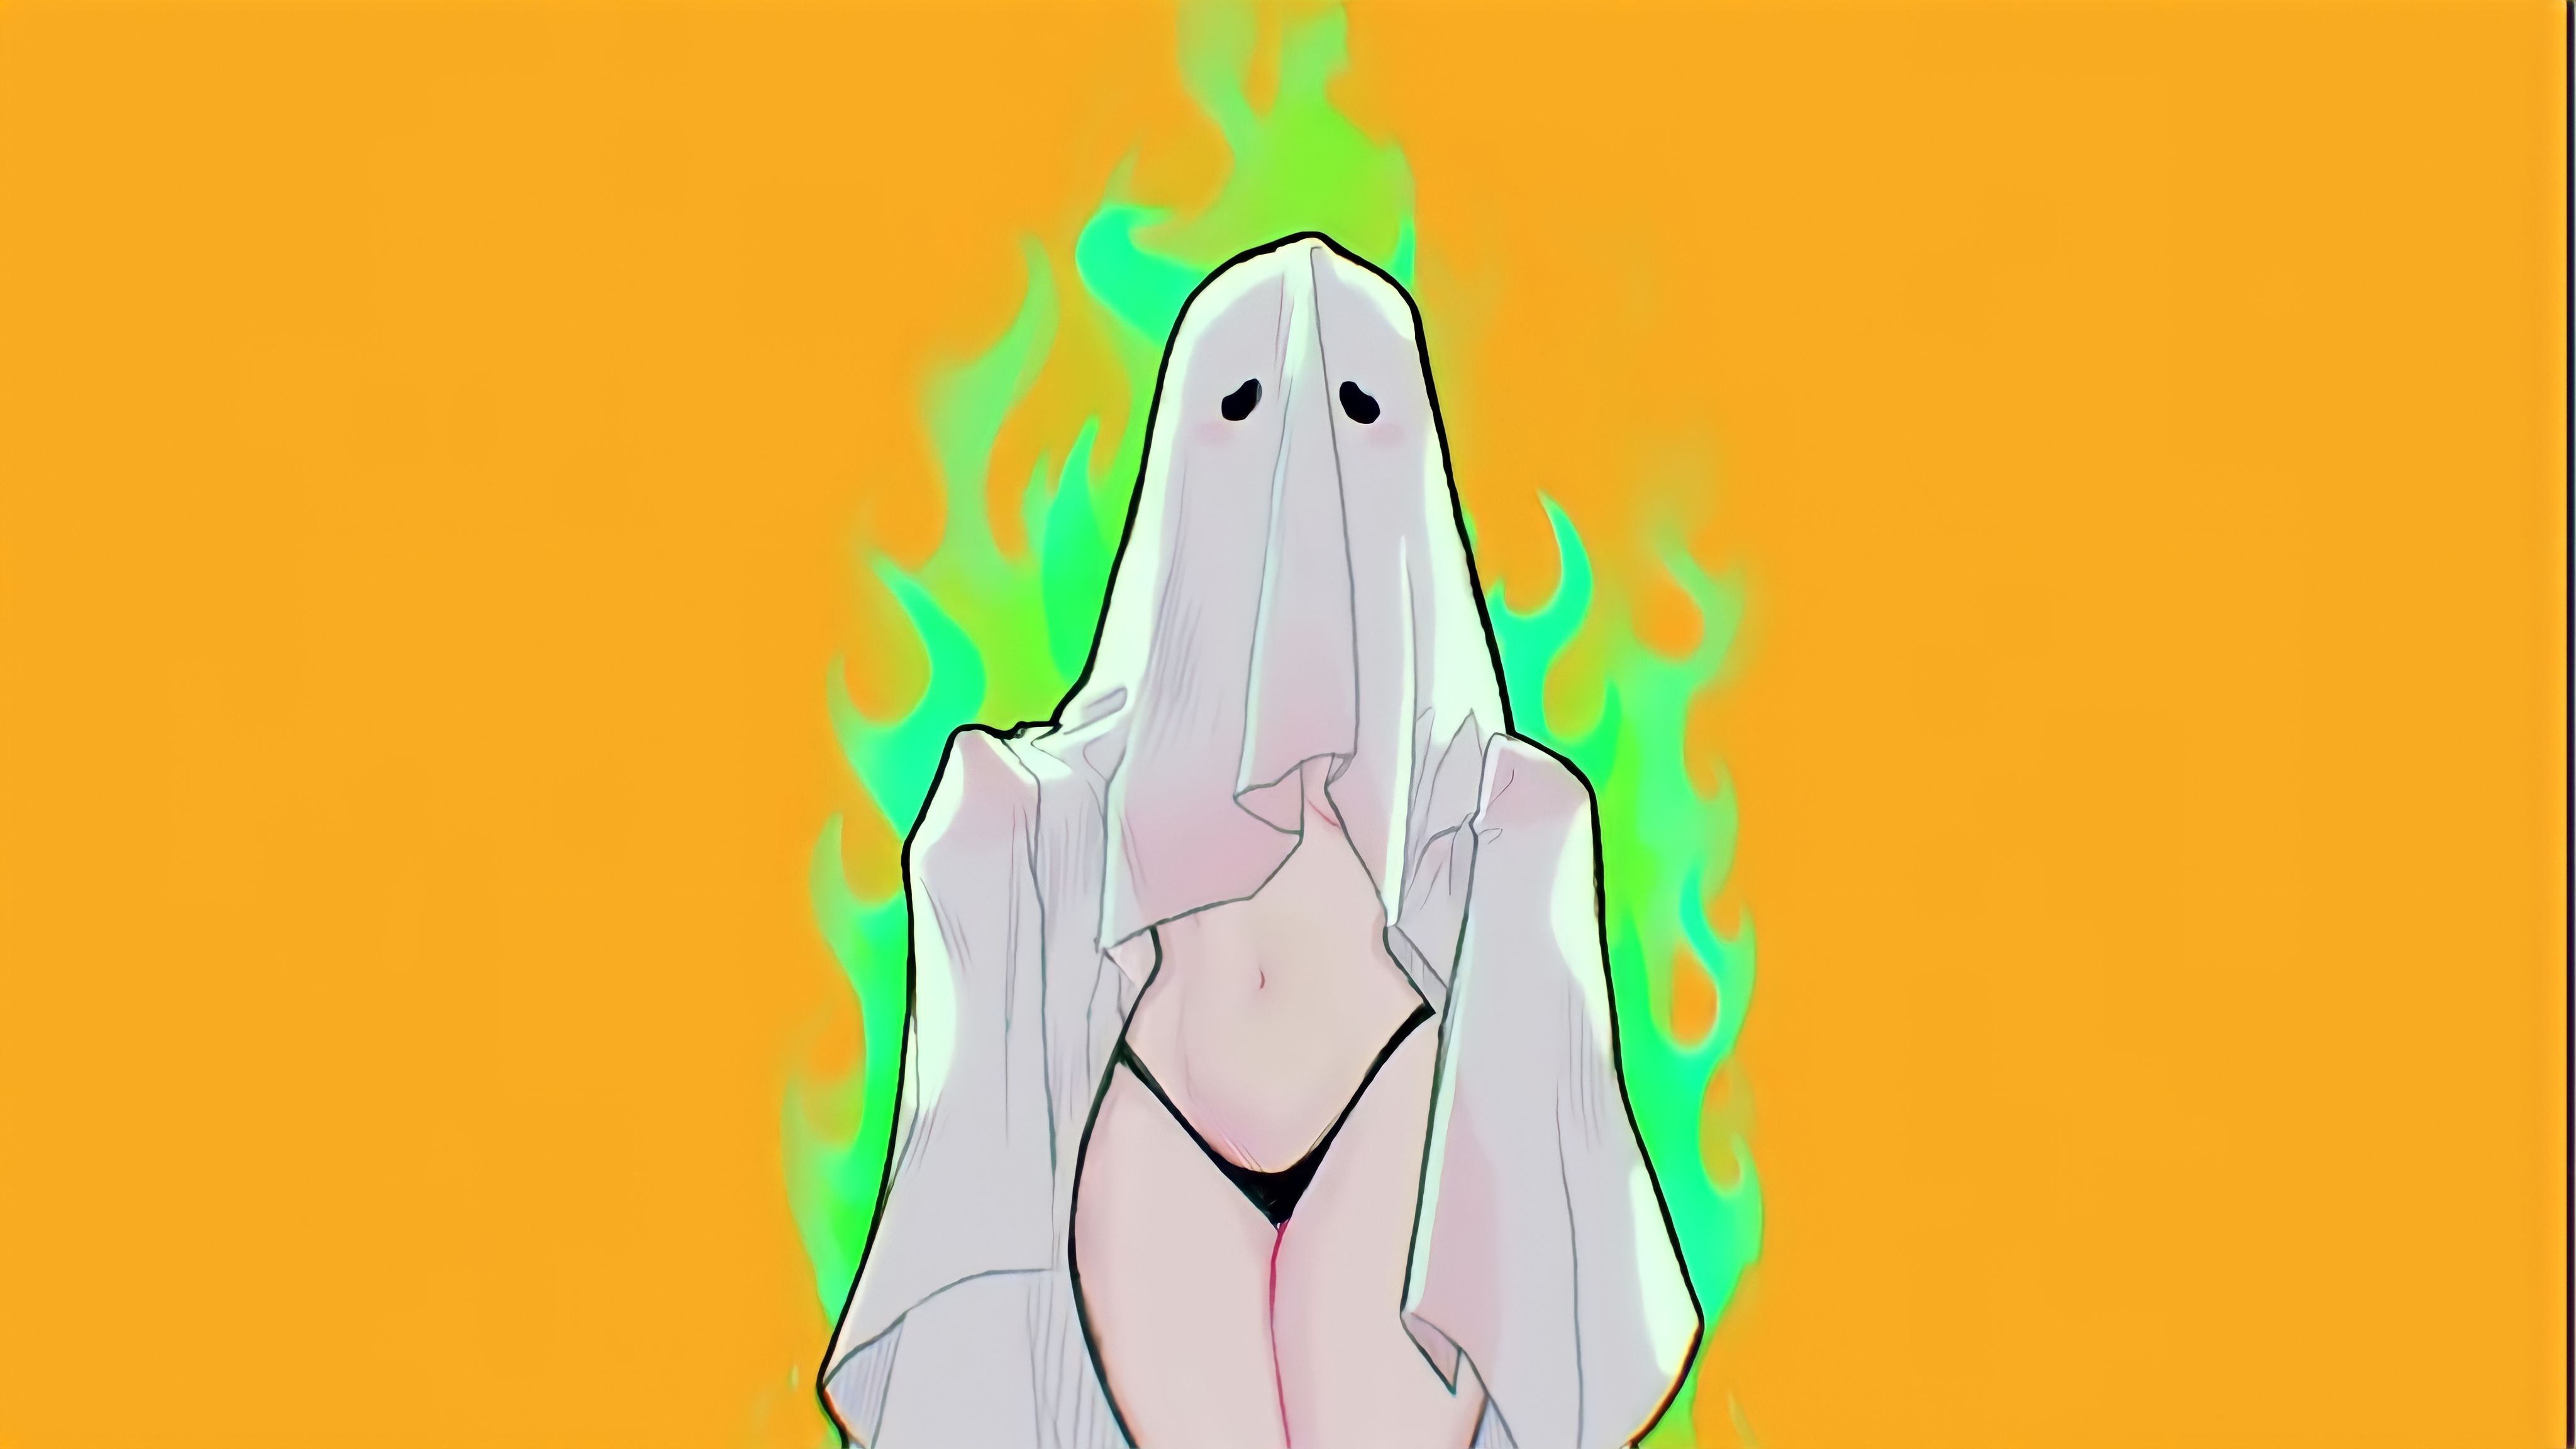 General 4096x2304 ghost girl Halloween pants ghost pale minimalism thong belly orange background simple background